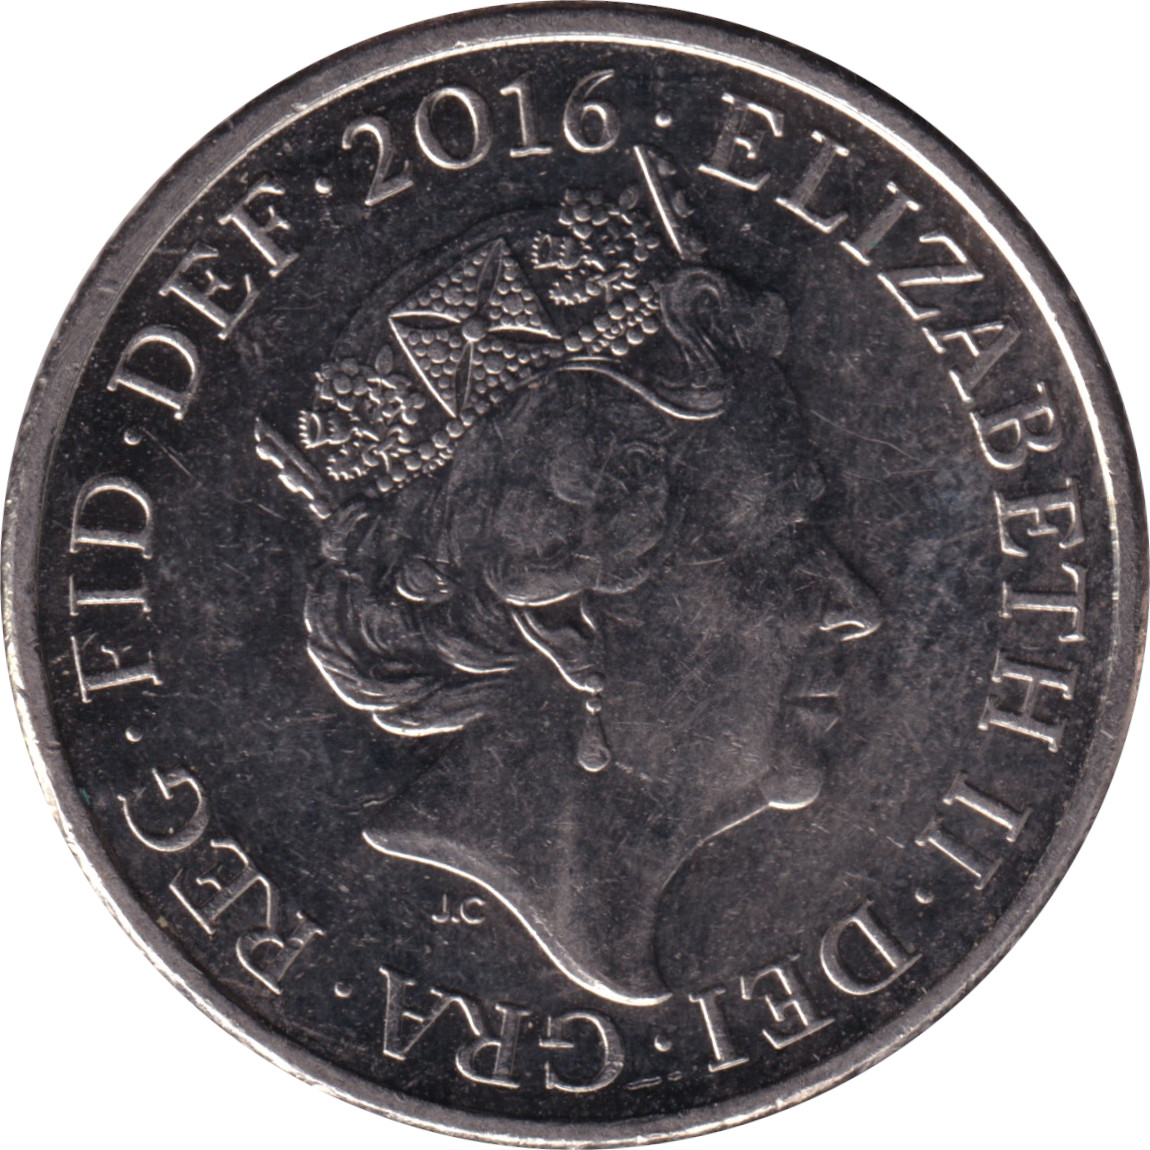 10 pence - Elizabeth II - Tête historique